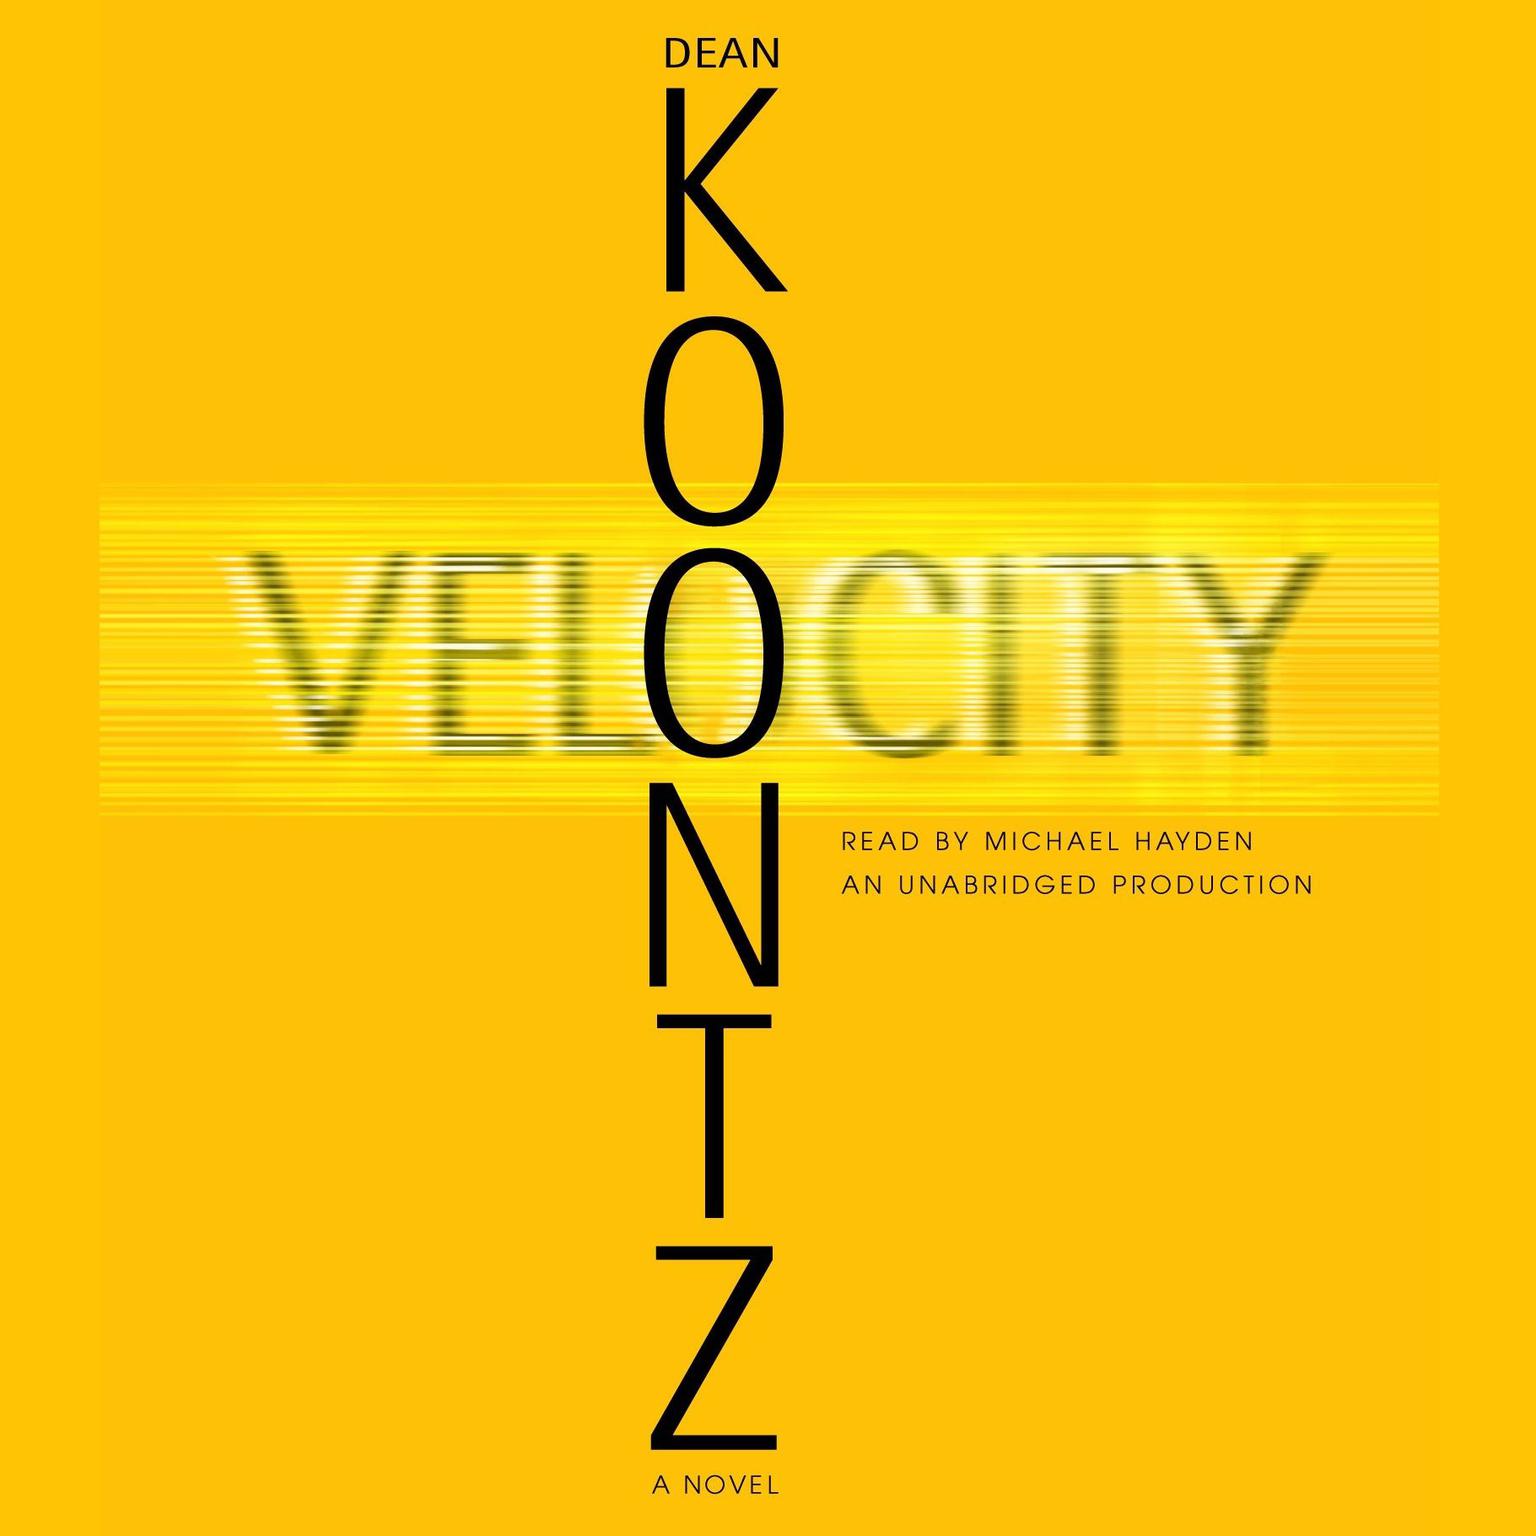 Velocity Audiobook, by Dean Koontz